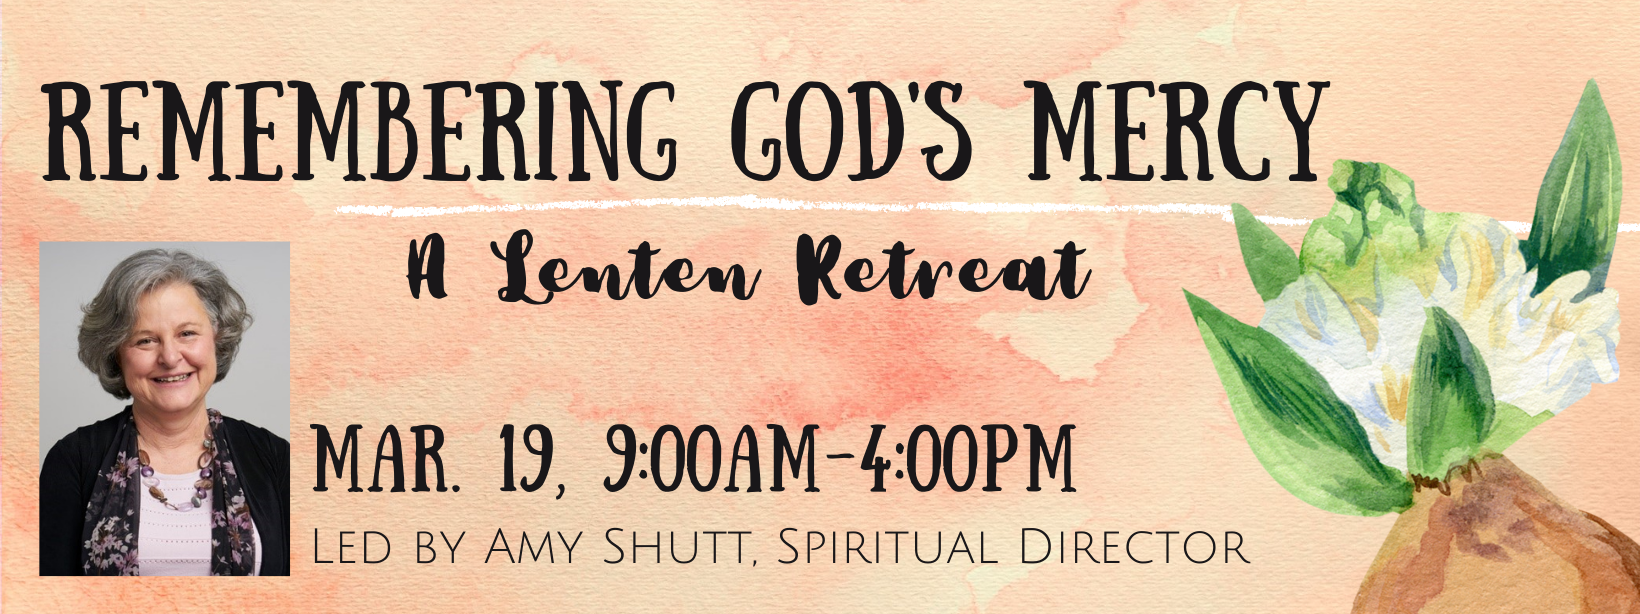 Remembering God’s Mercy: Lenten Retreat